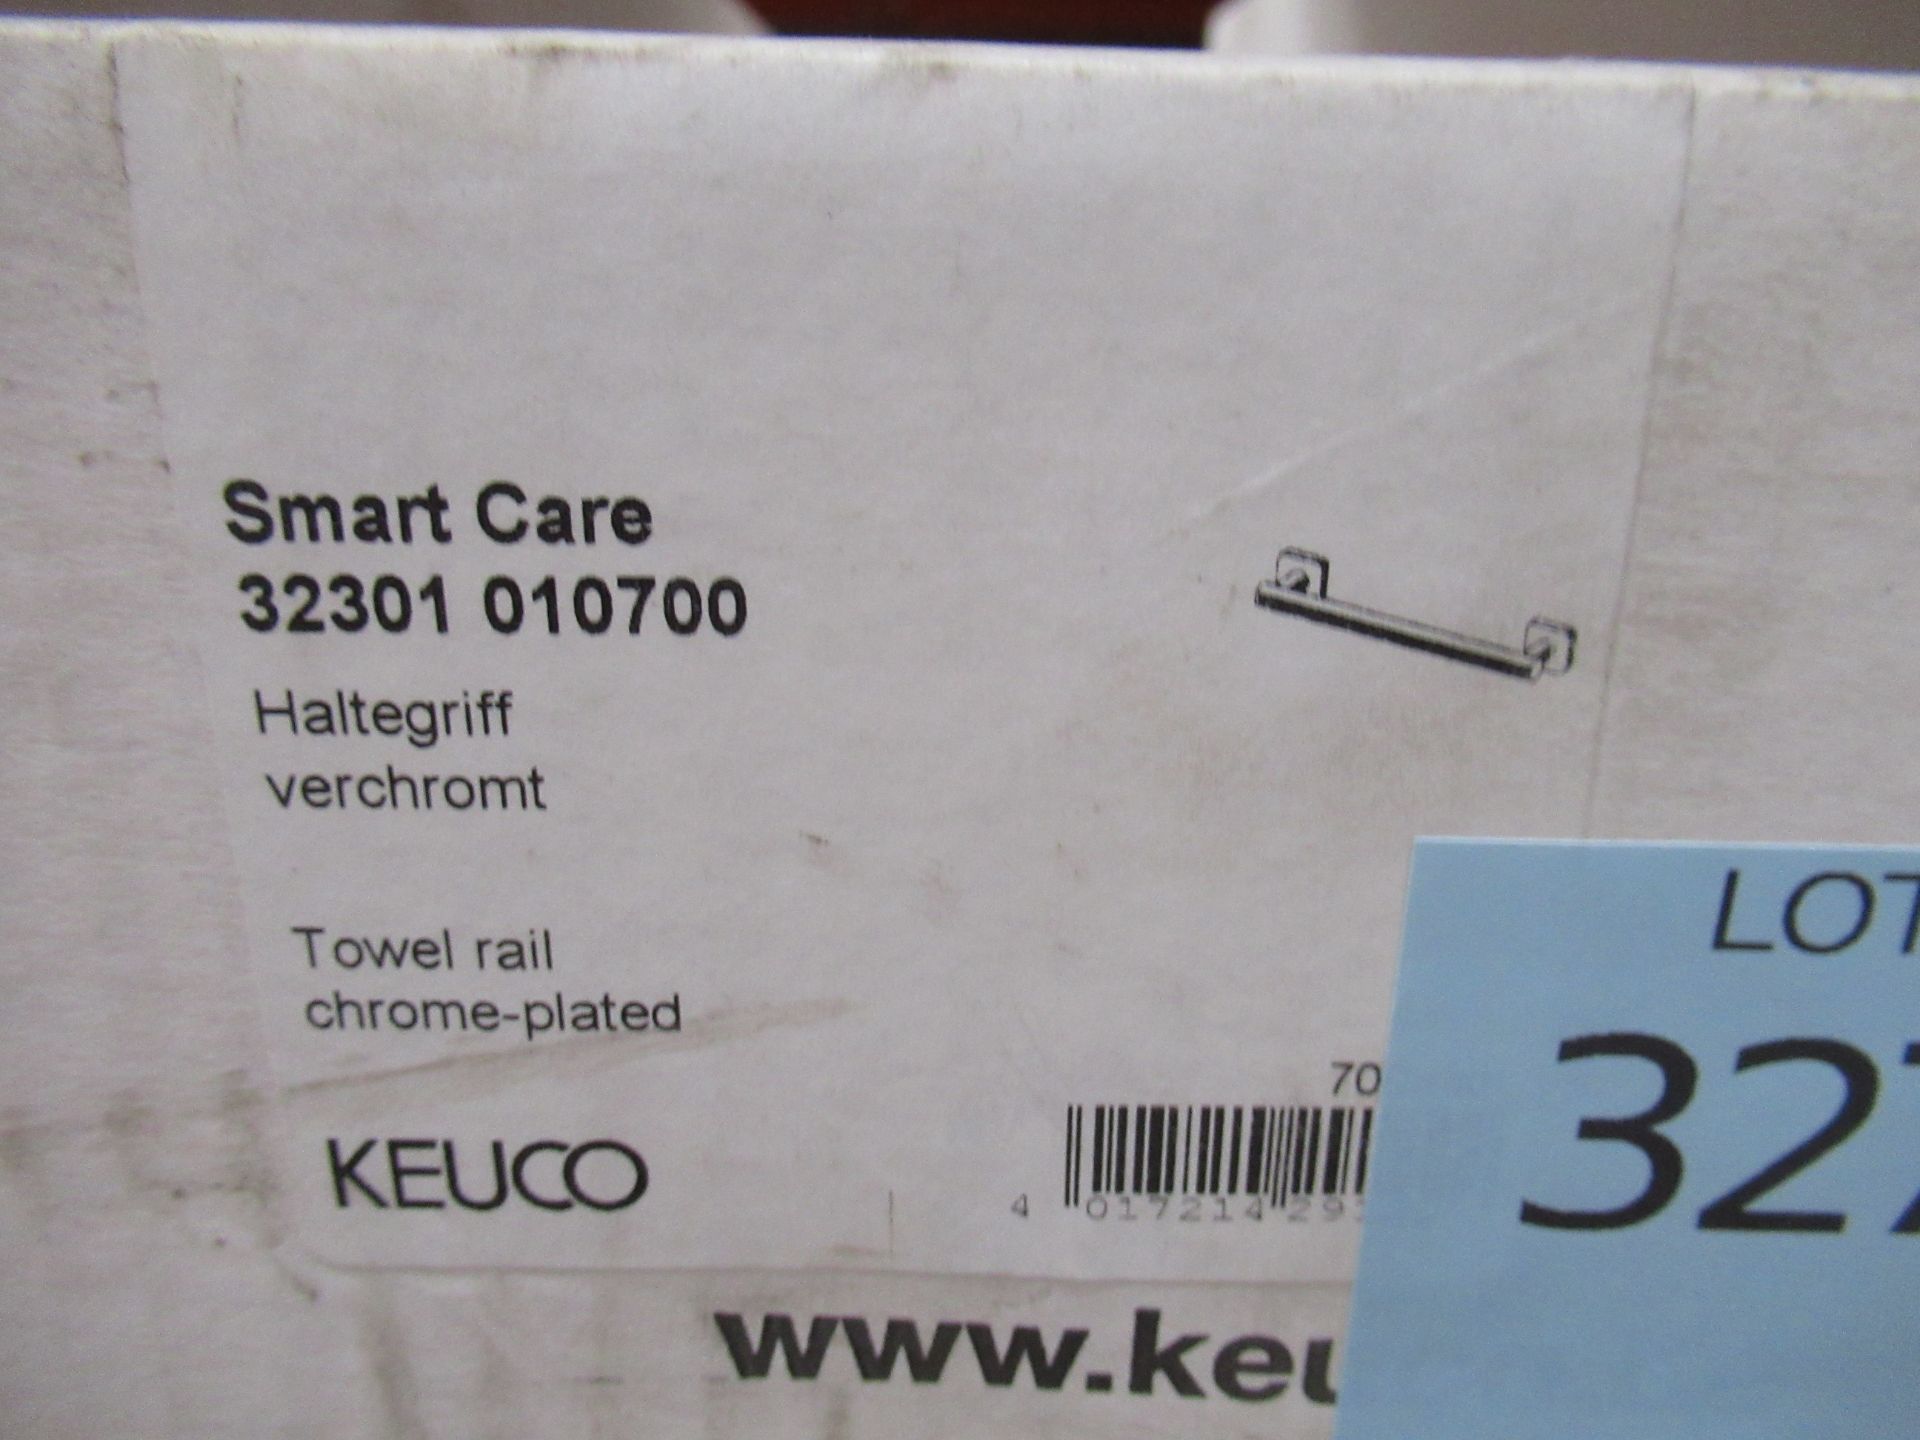 A Keuco Smart Care Towel Rail, Chrome Plated, P/N 32301-010700 - Image 2 of 2